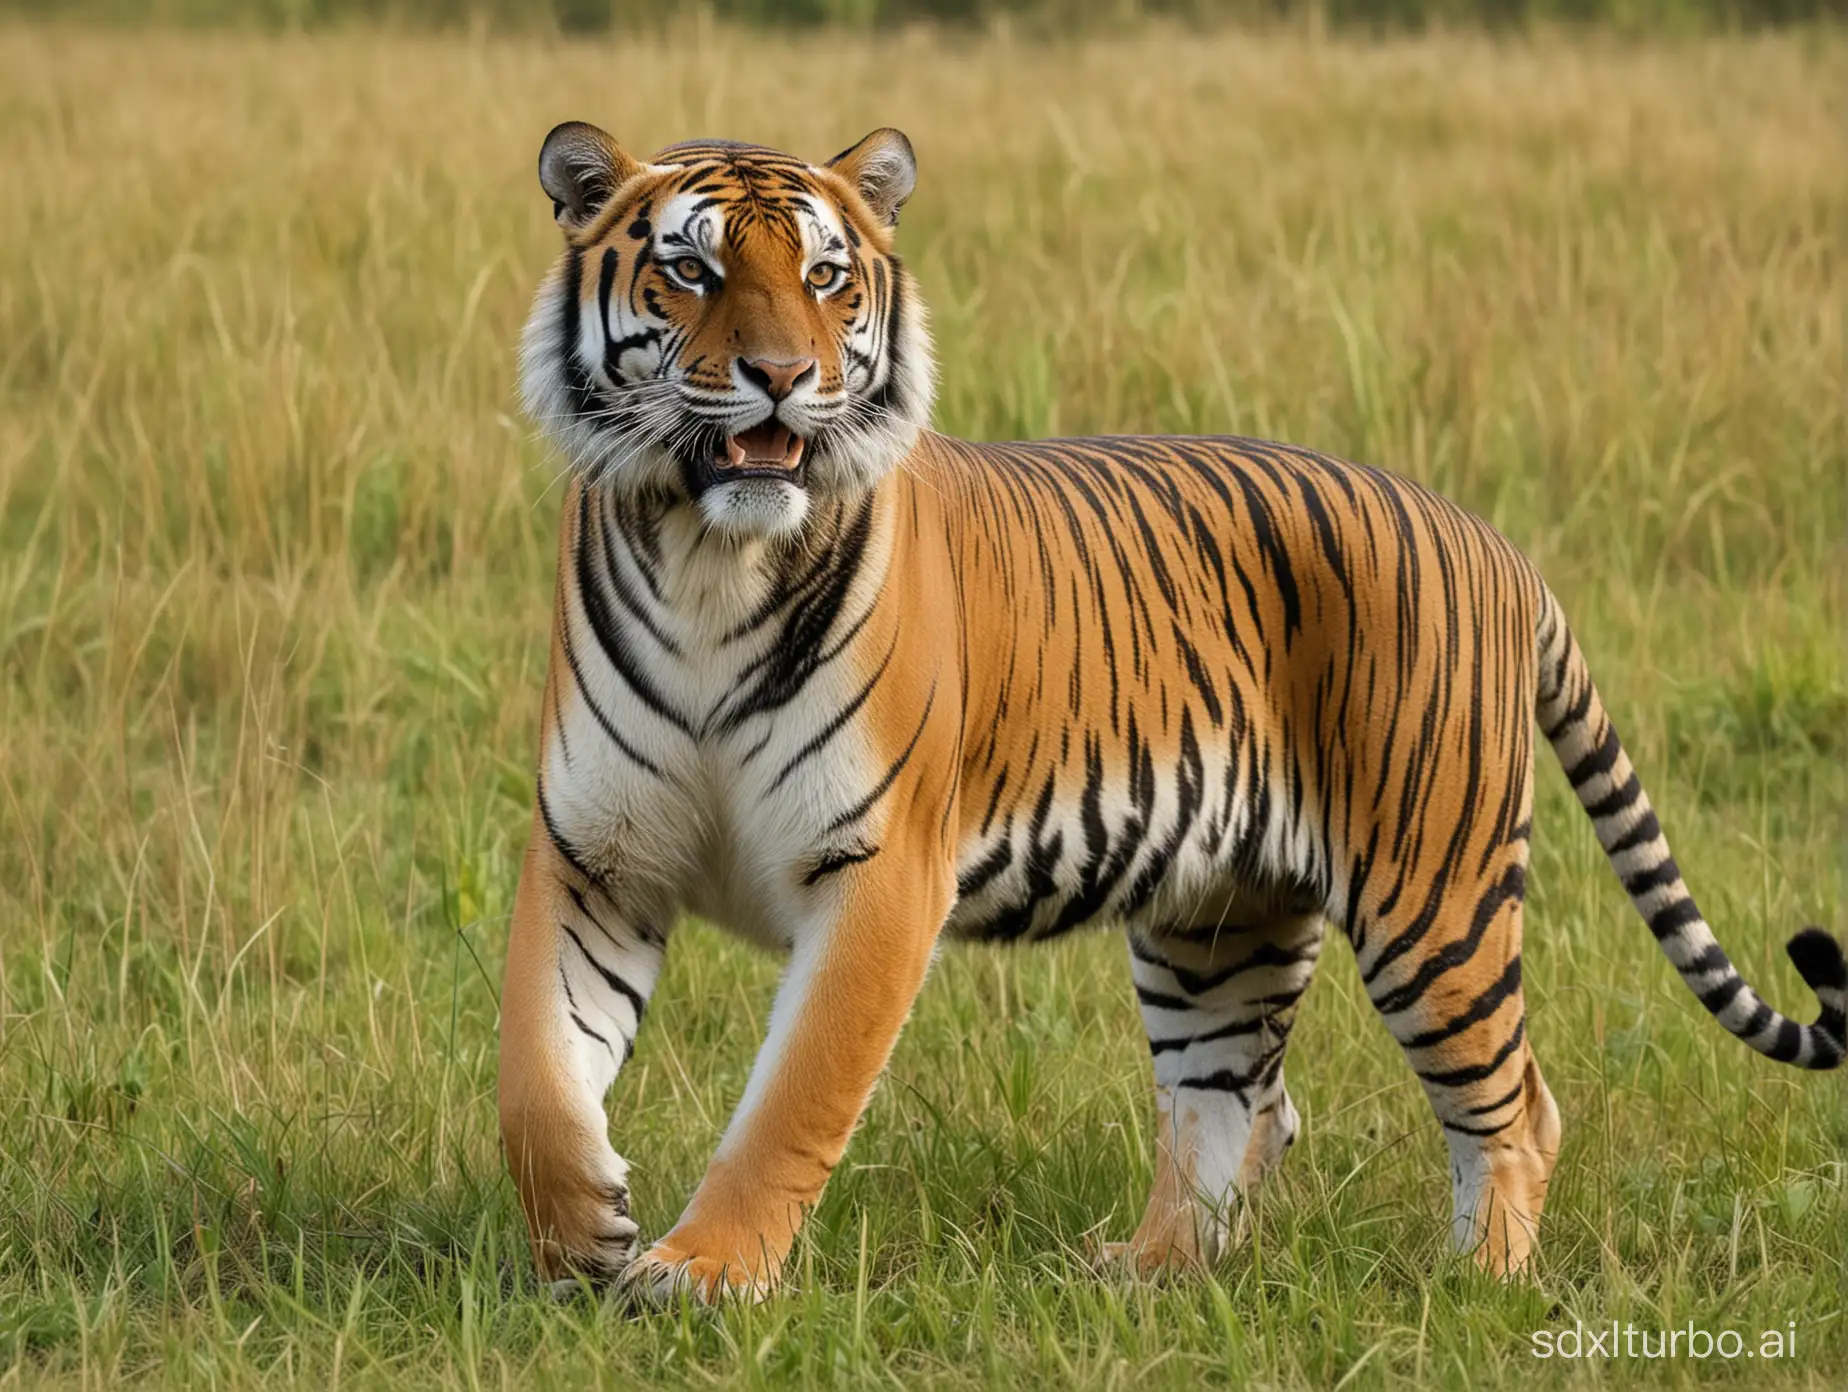 Majestic-Roaring-Royal-Bengal-Tiger-in-Natural-Grassland-Habitat